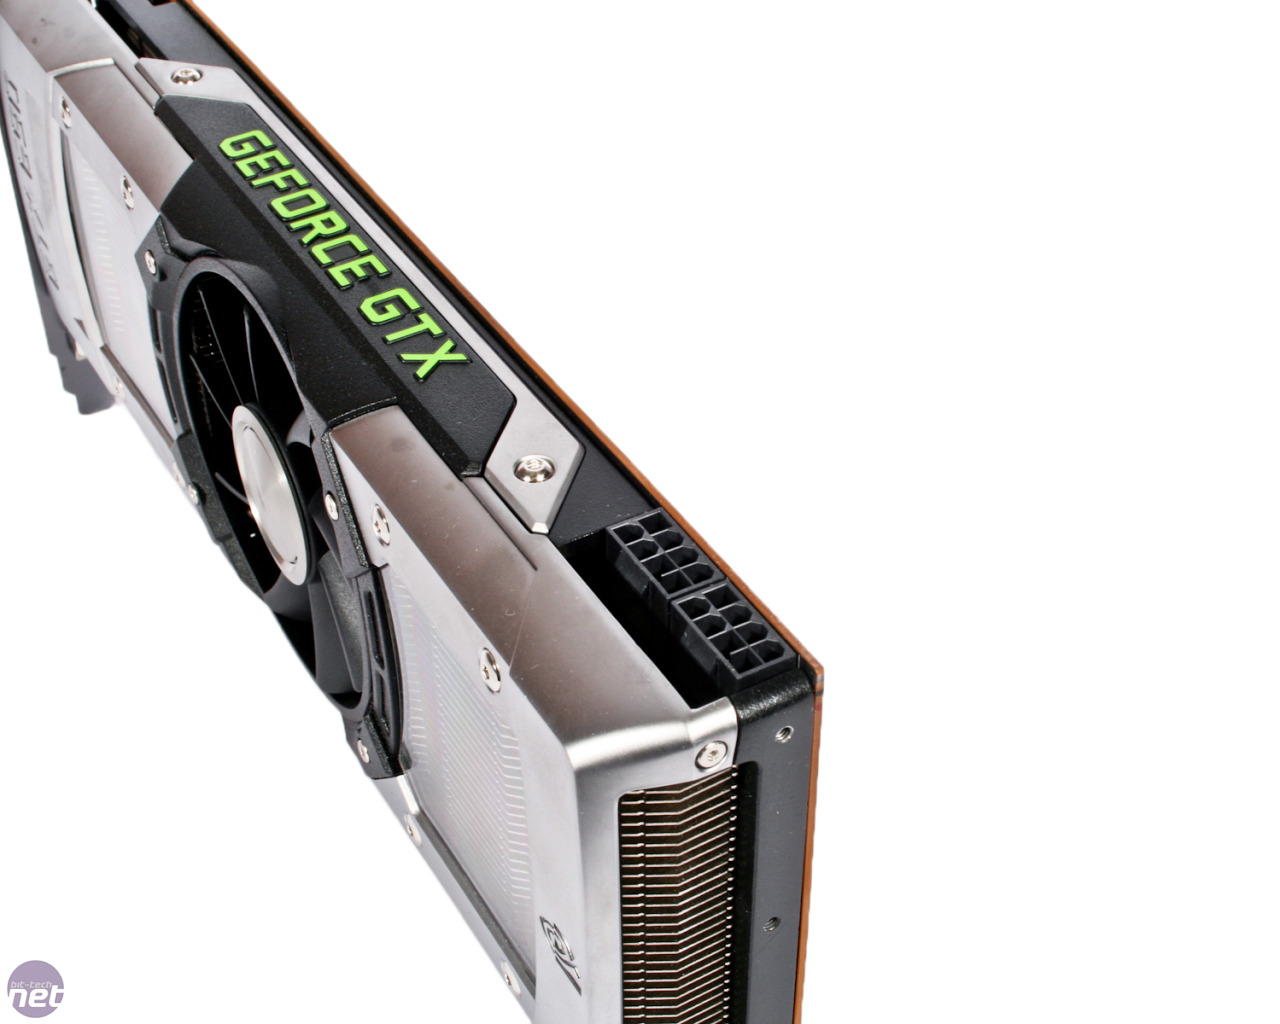 Nvidia GeForce GTX 690 4GB Review | bit 